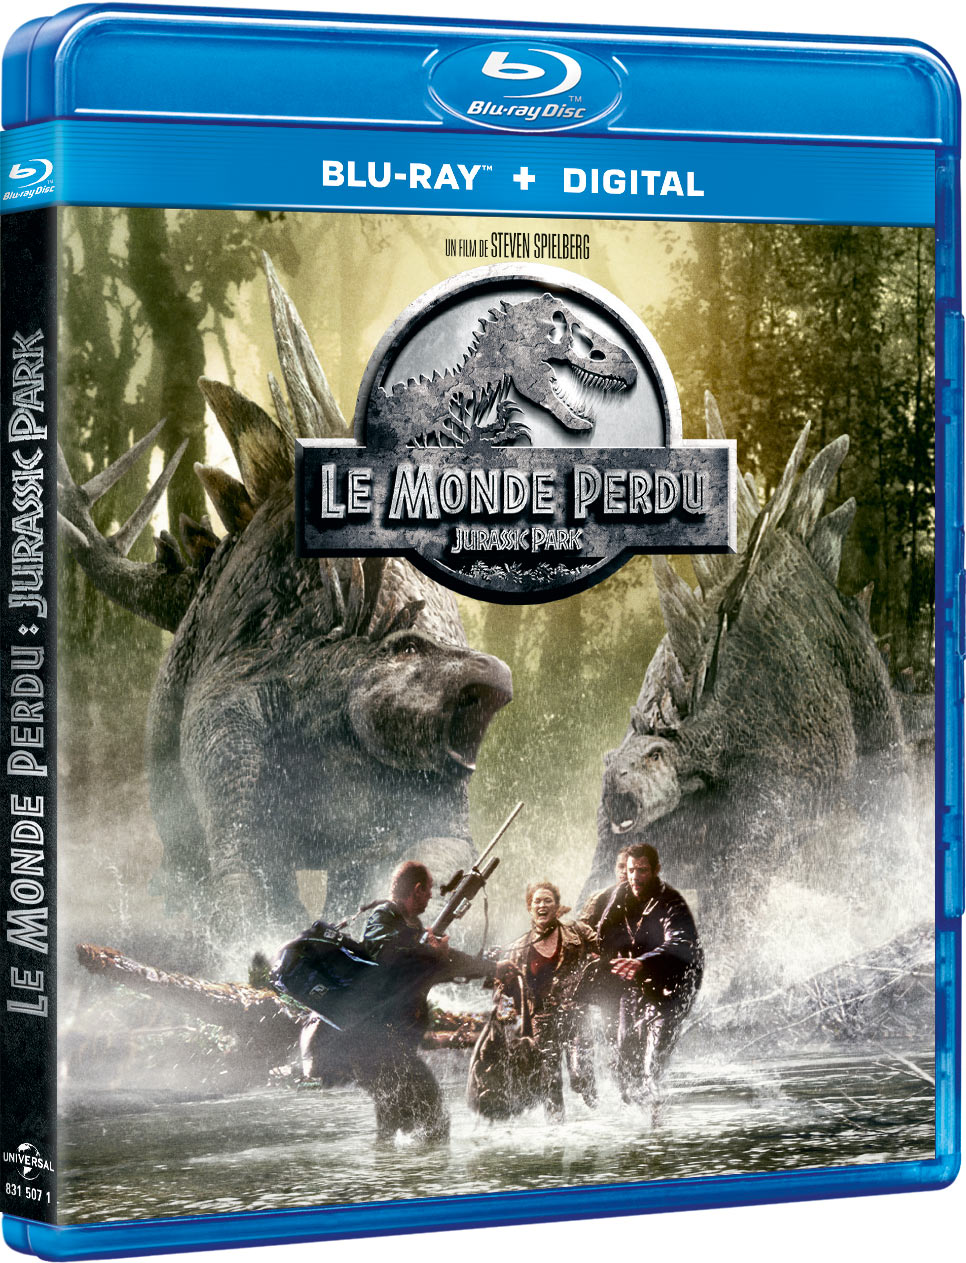 Jurassic Park 2 - Le Monde perdu - Blu-ray + Digital